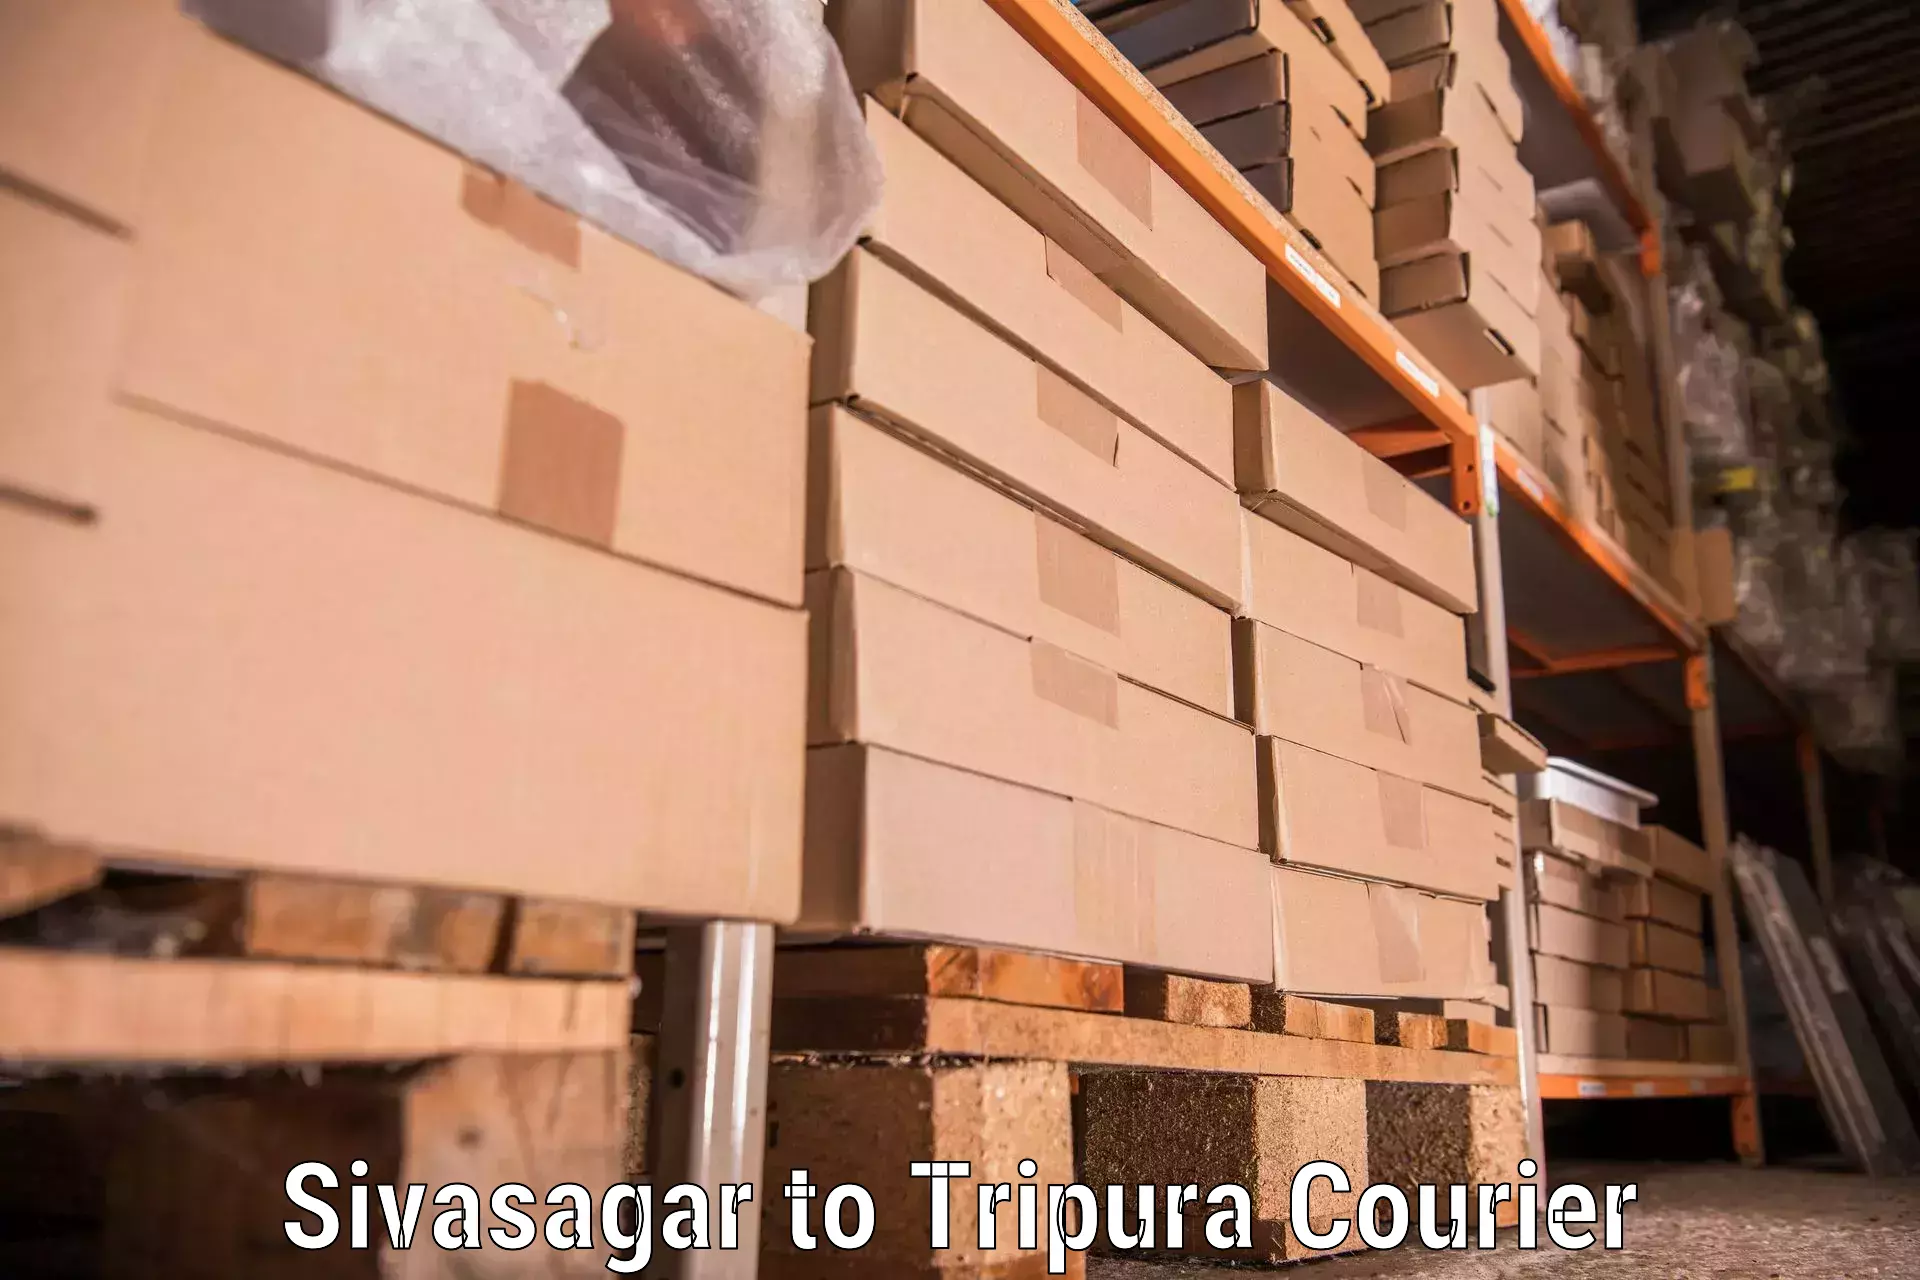 Budget-friendly movers Sivasagar to Amarpur